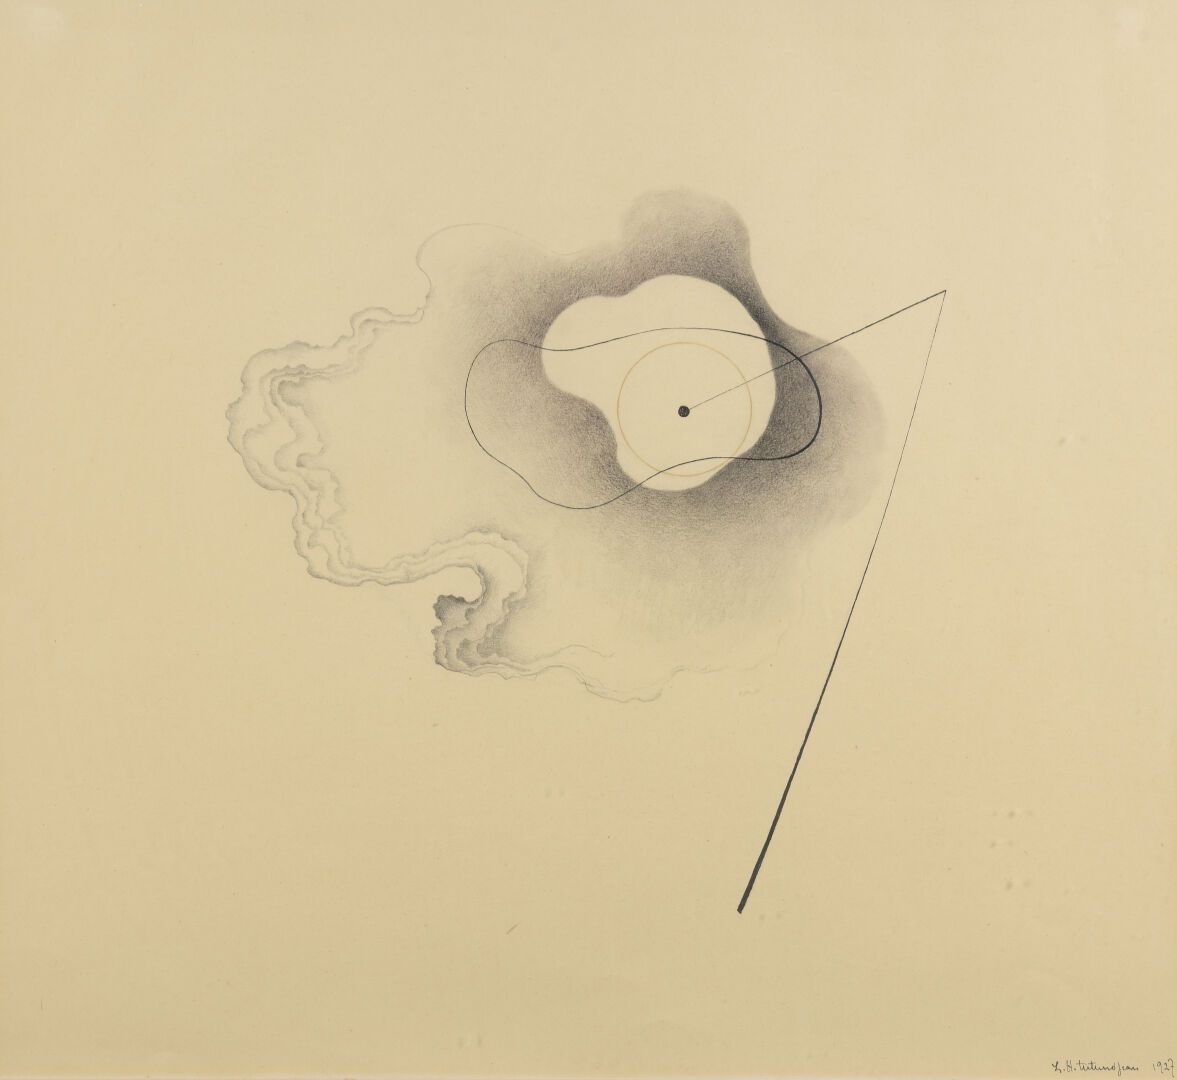 Null 莱昂-阿瑟-图顿吉安(Léon Arthur TUTUNDJIAN) (1905-1968)

有红圈的构图

纸上水彩和印度墨水。

右下方有签名和&hellip;